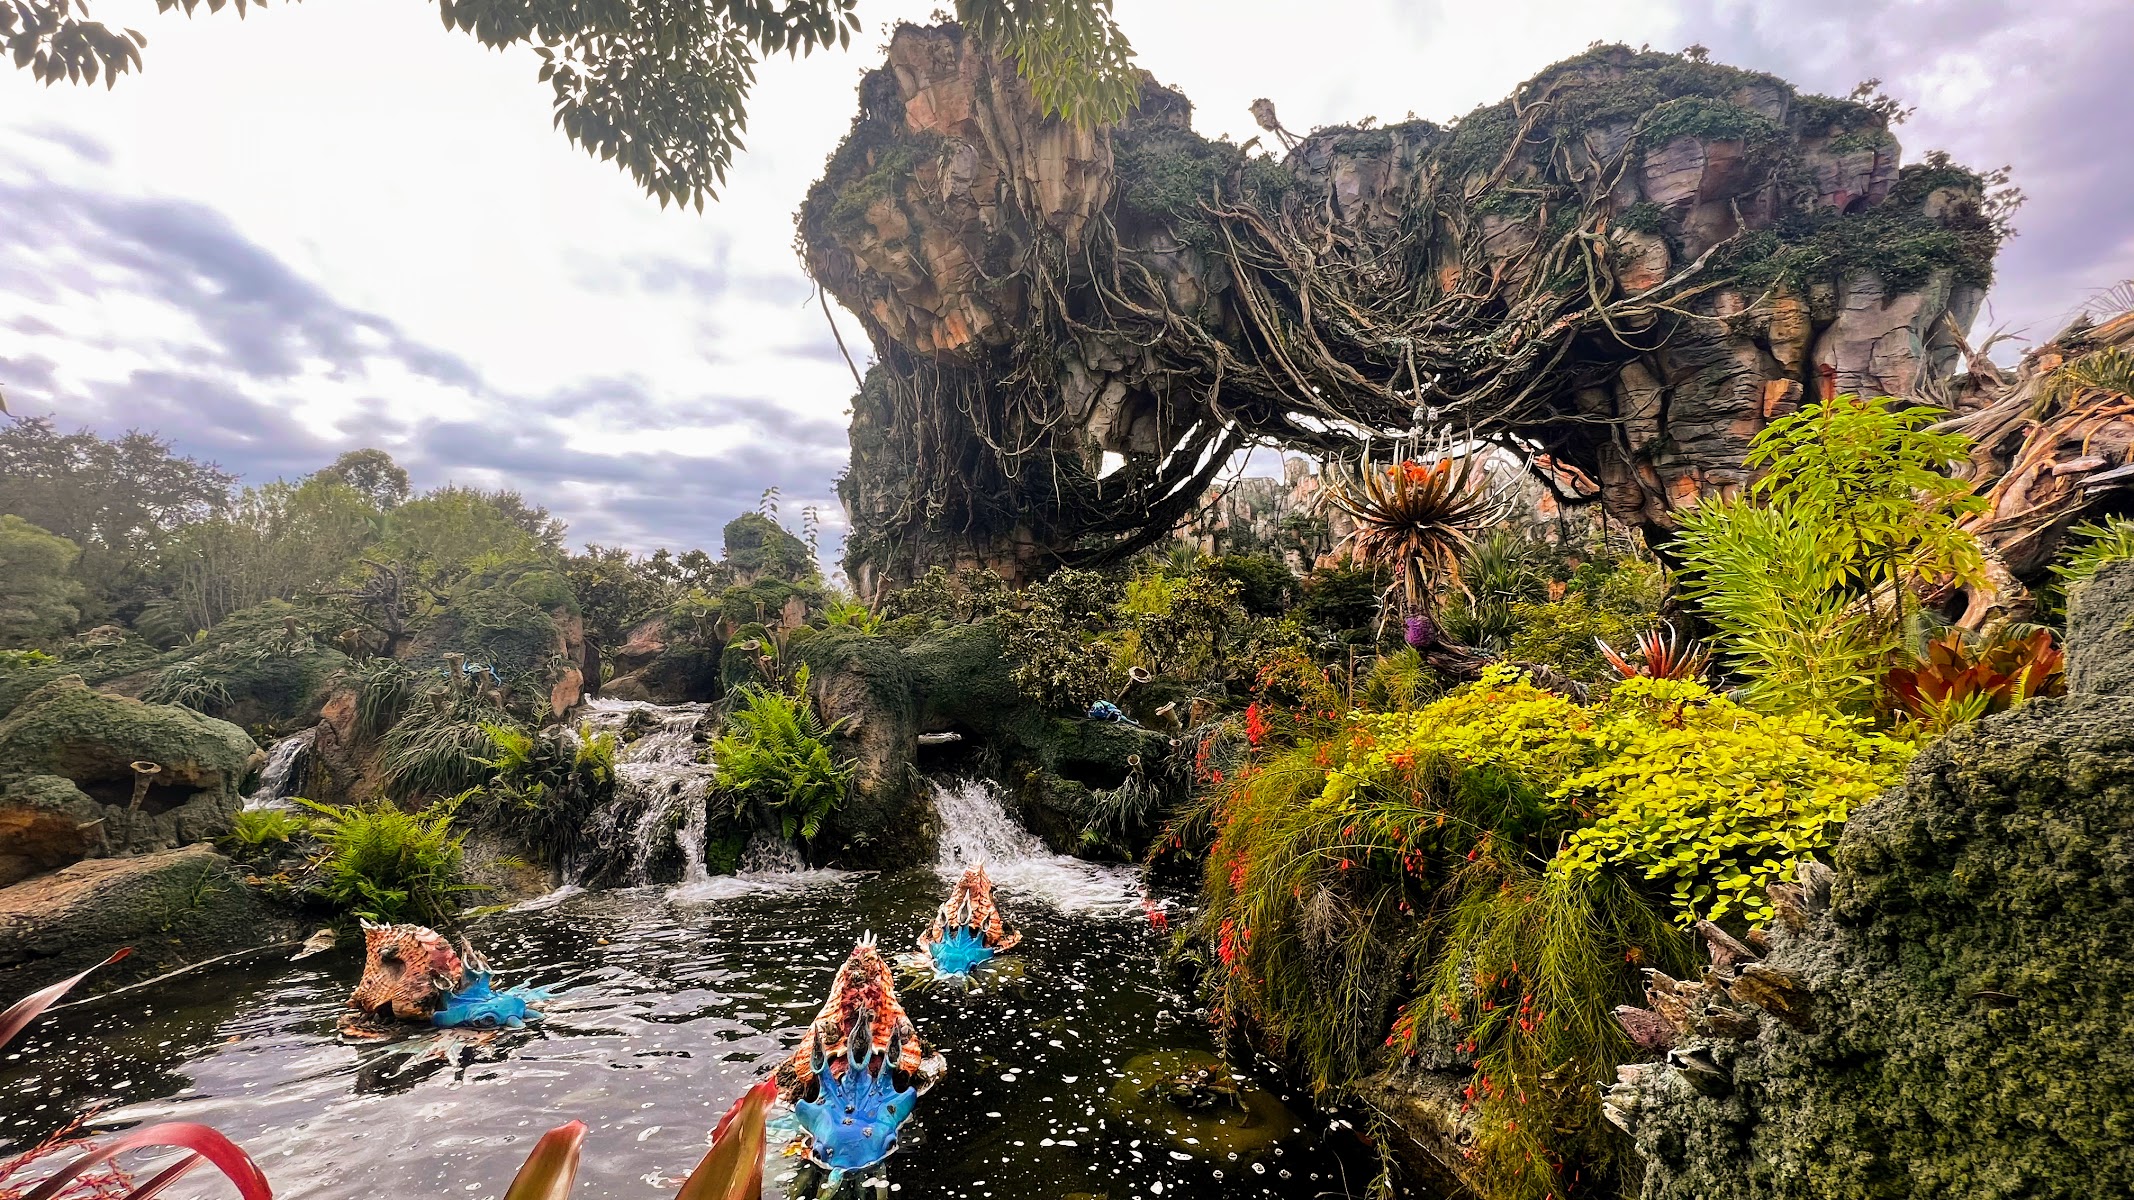 Renderings of Avatar at Disney Worlds Animal Kingdom released